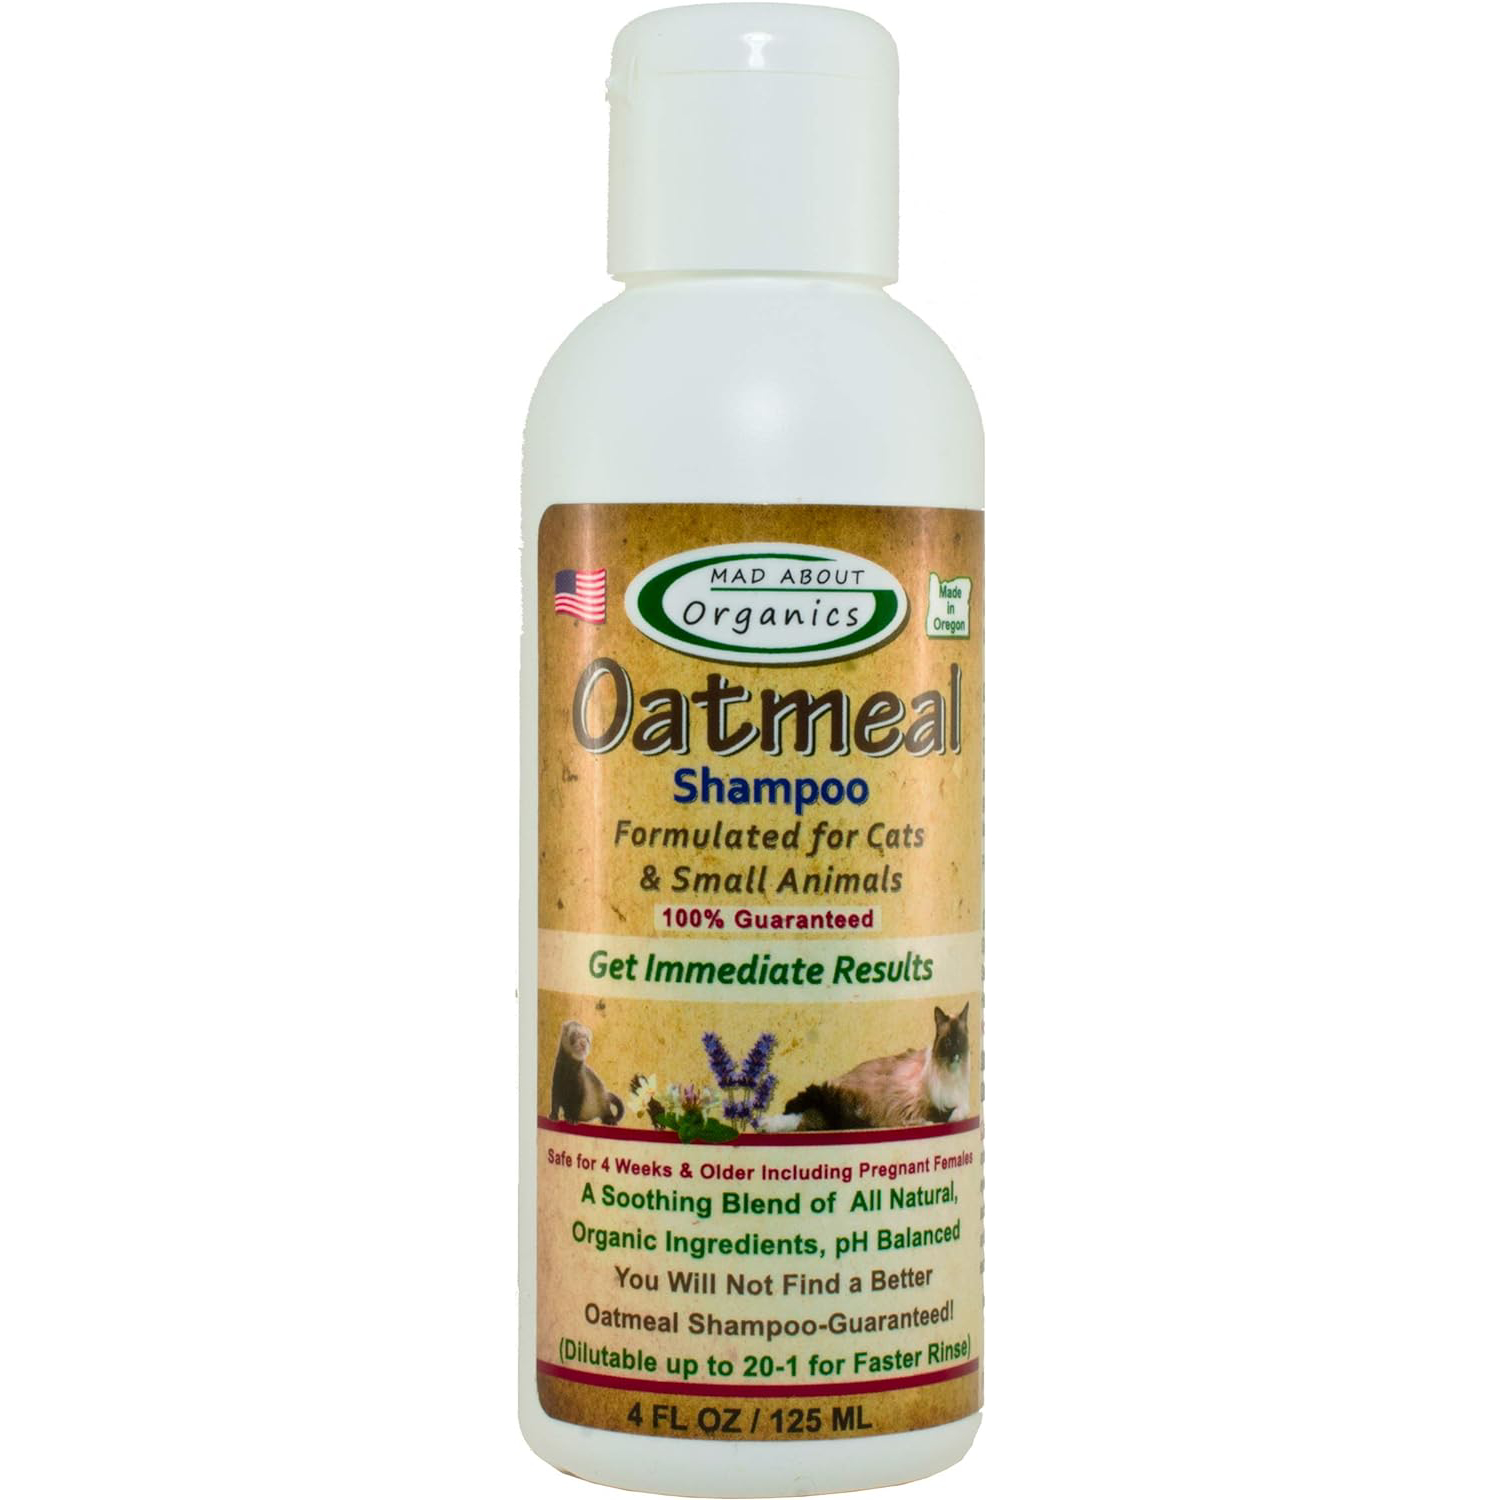 Mad About Organics Oatmeal Shampoo new